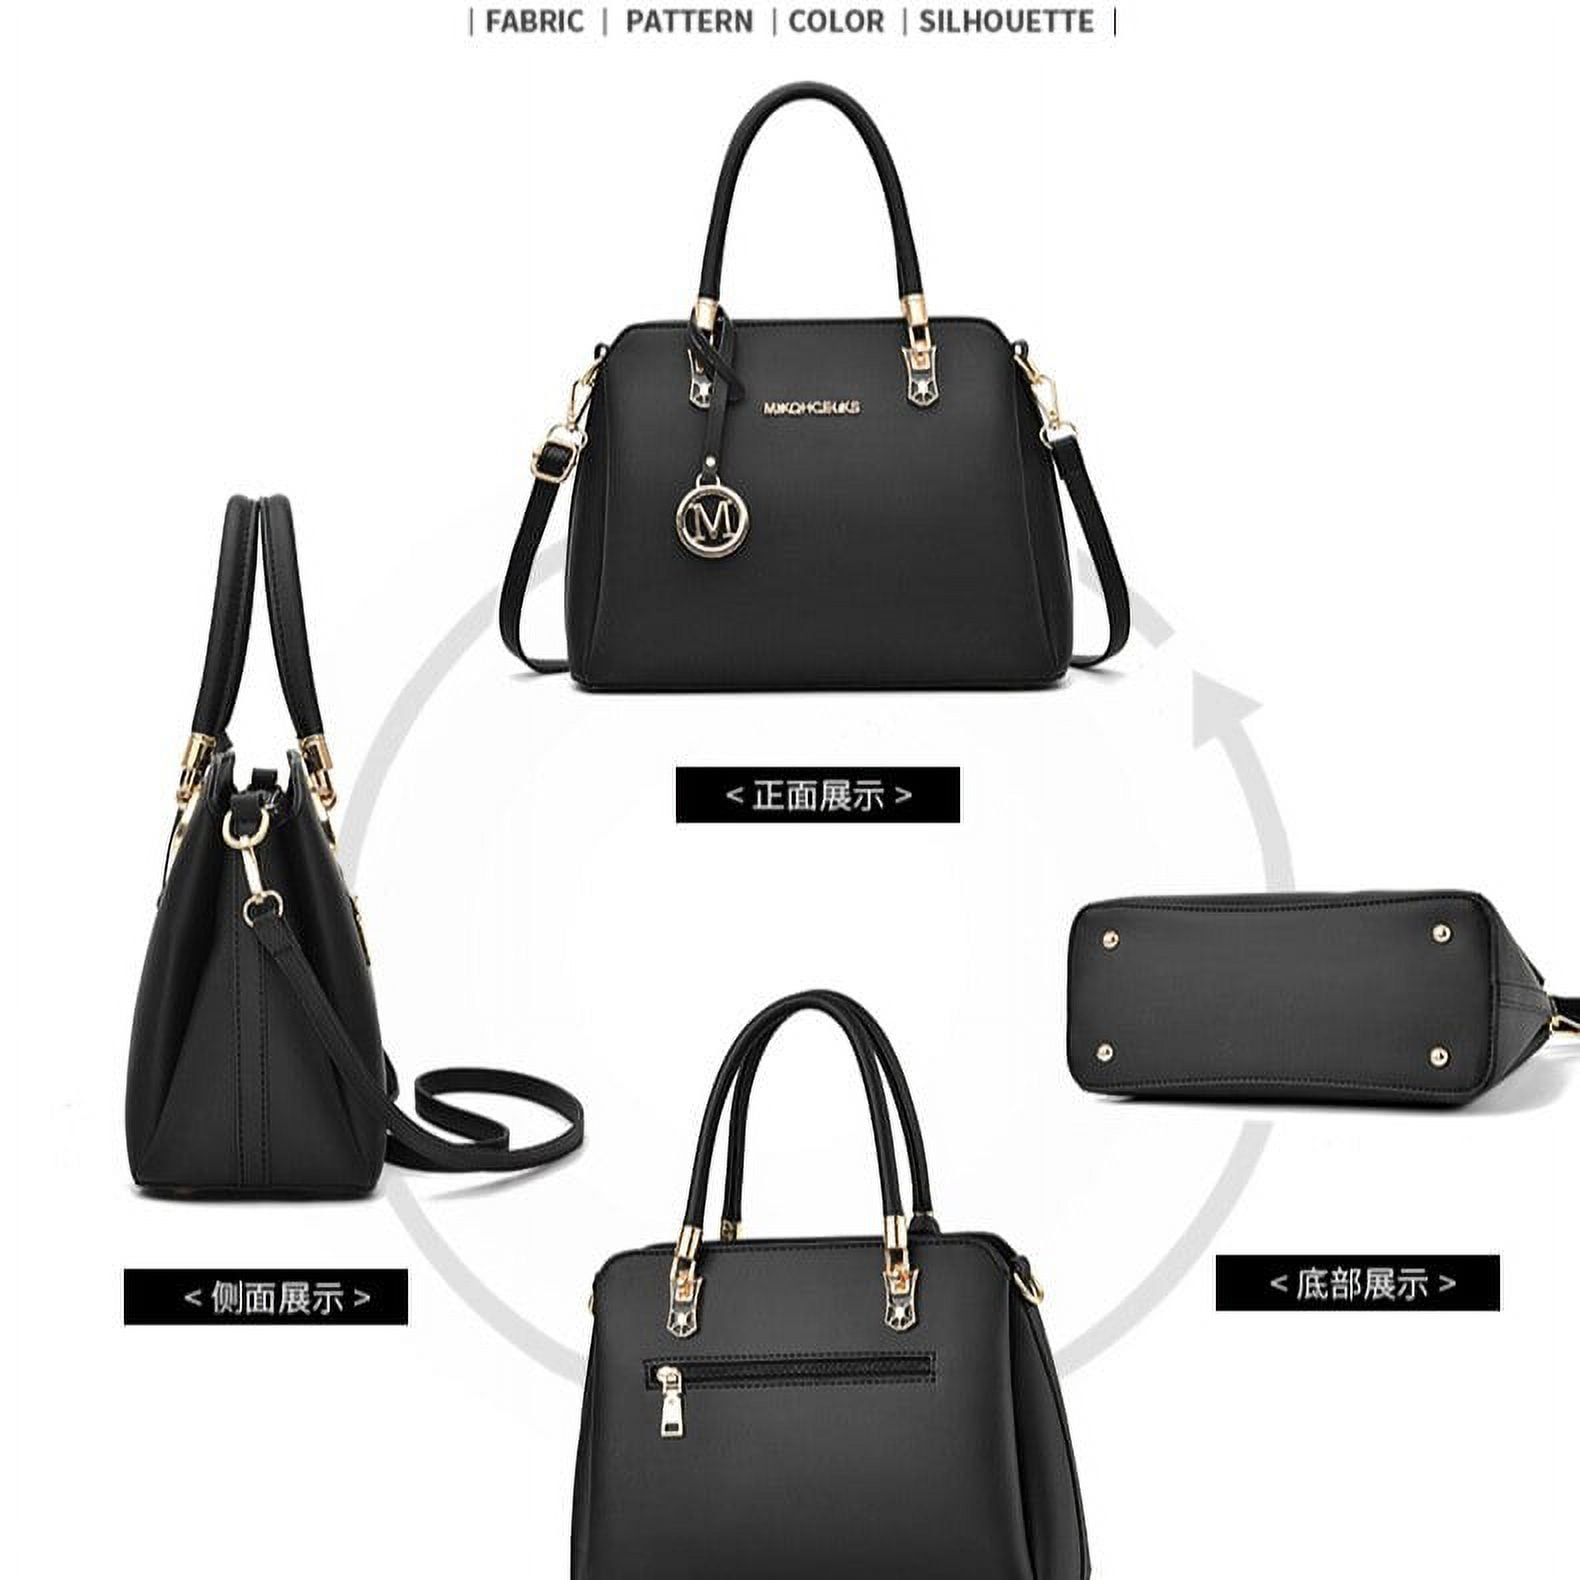 Purses and Handbags for Women Top Handle Bags Leather Satchel Totes  Shoulder Bag | eBay